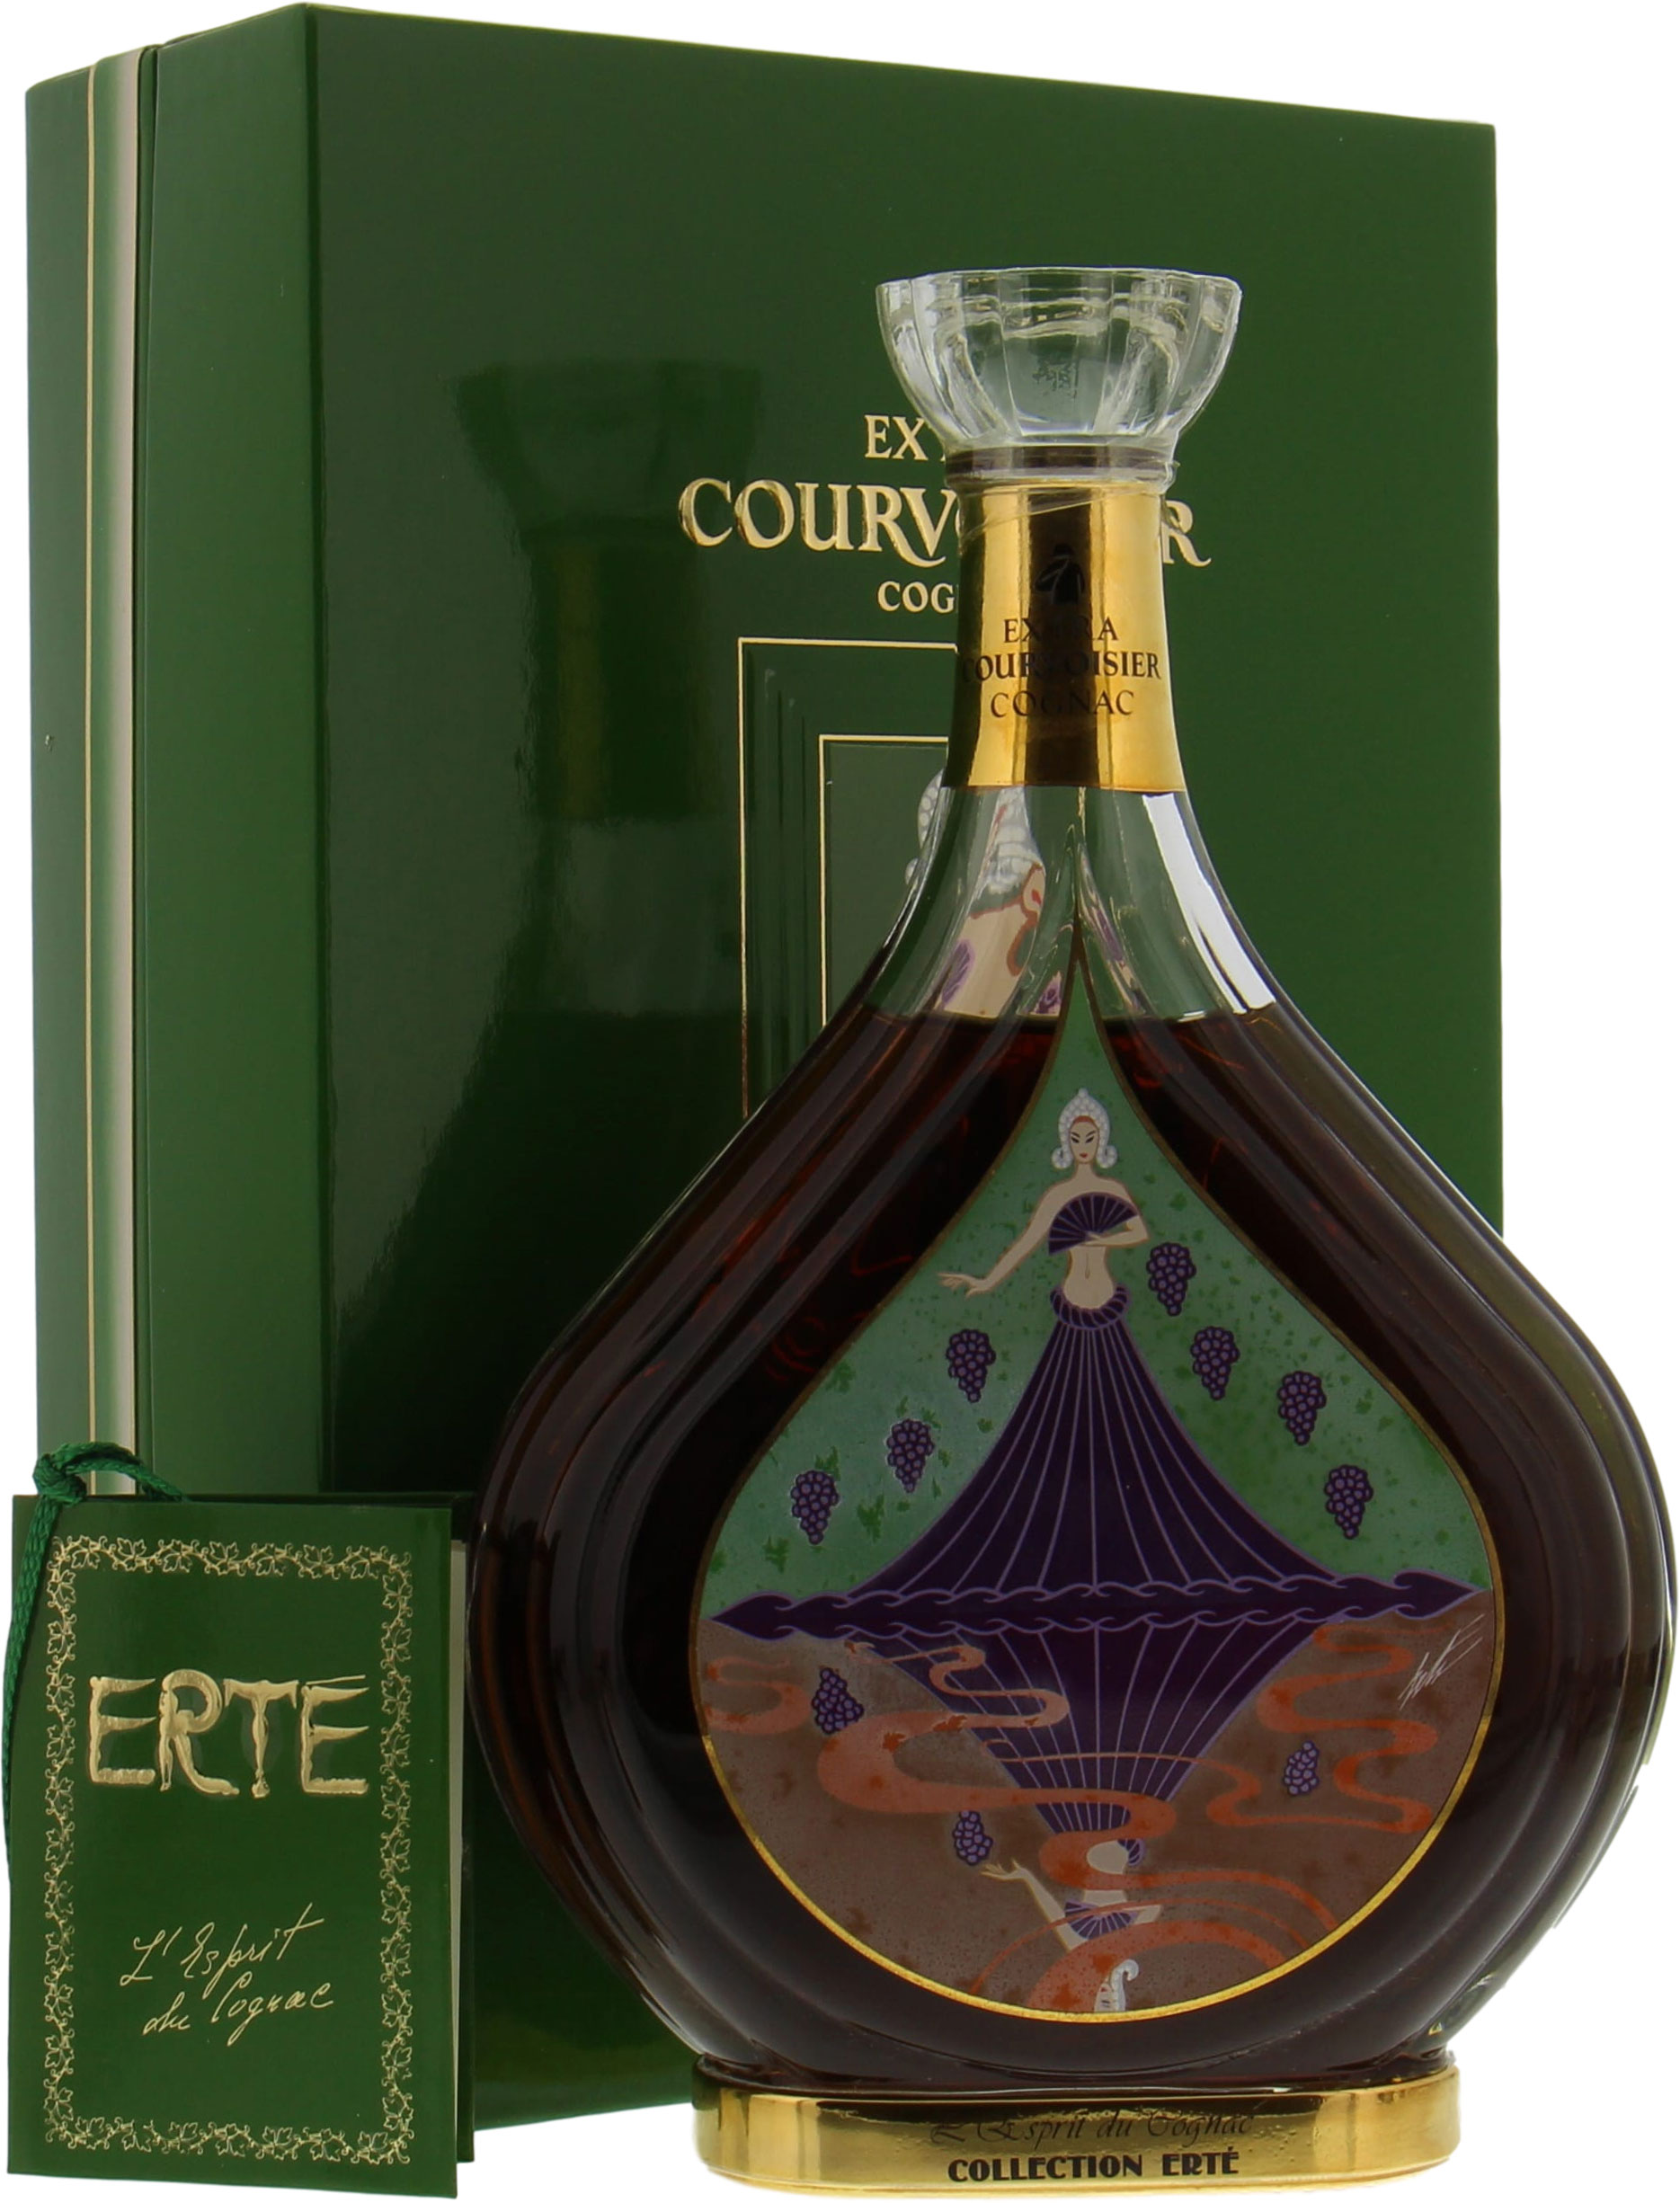 Courvoisier Cognac - Erte no 6 NV From Original Wooden Case